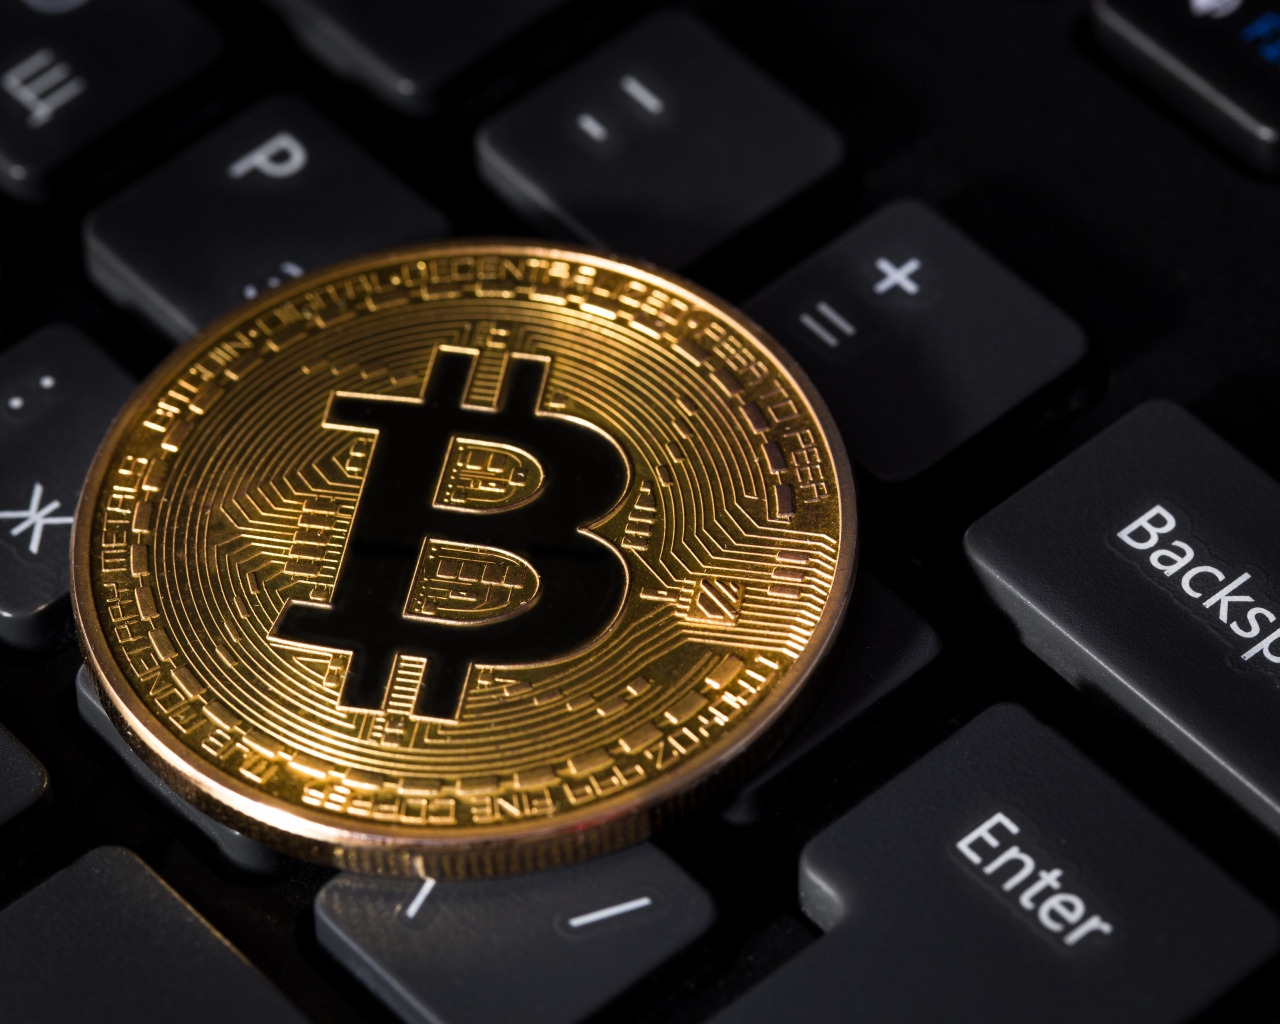 Coin bitcoin lies on a black keyboard